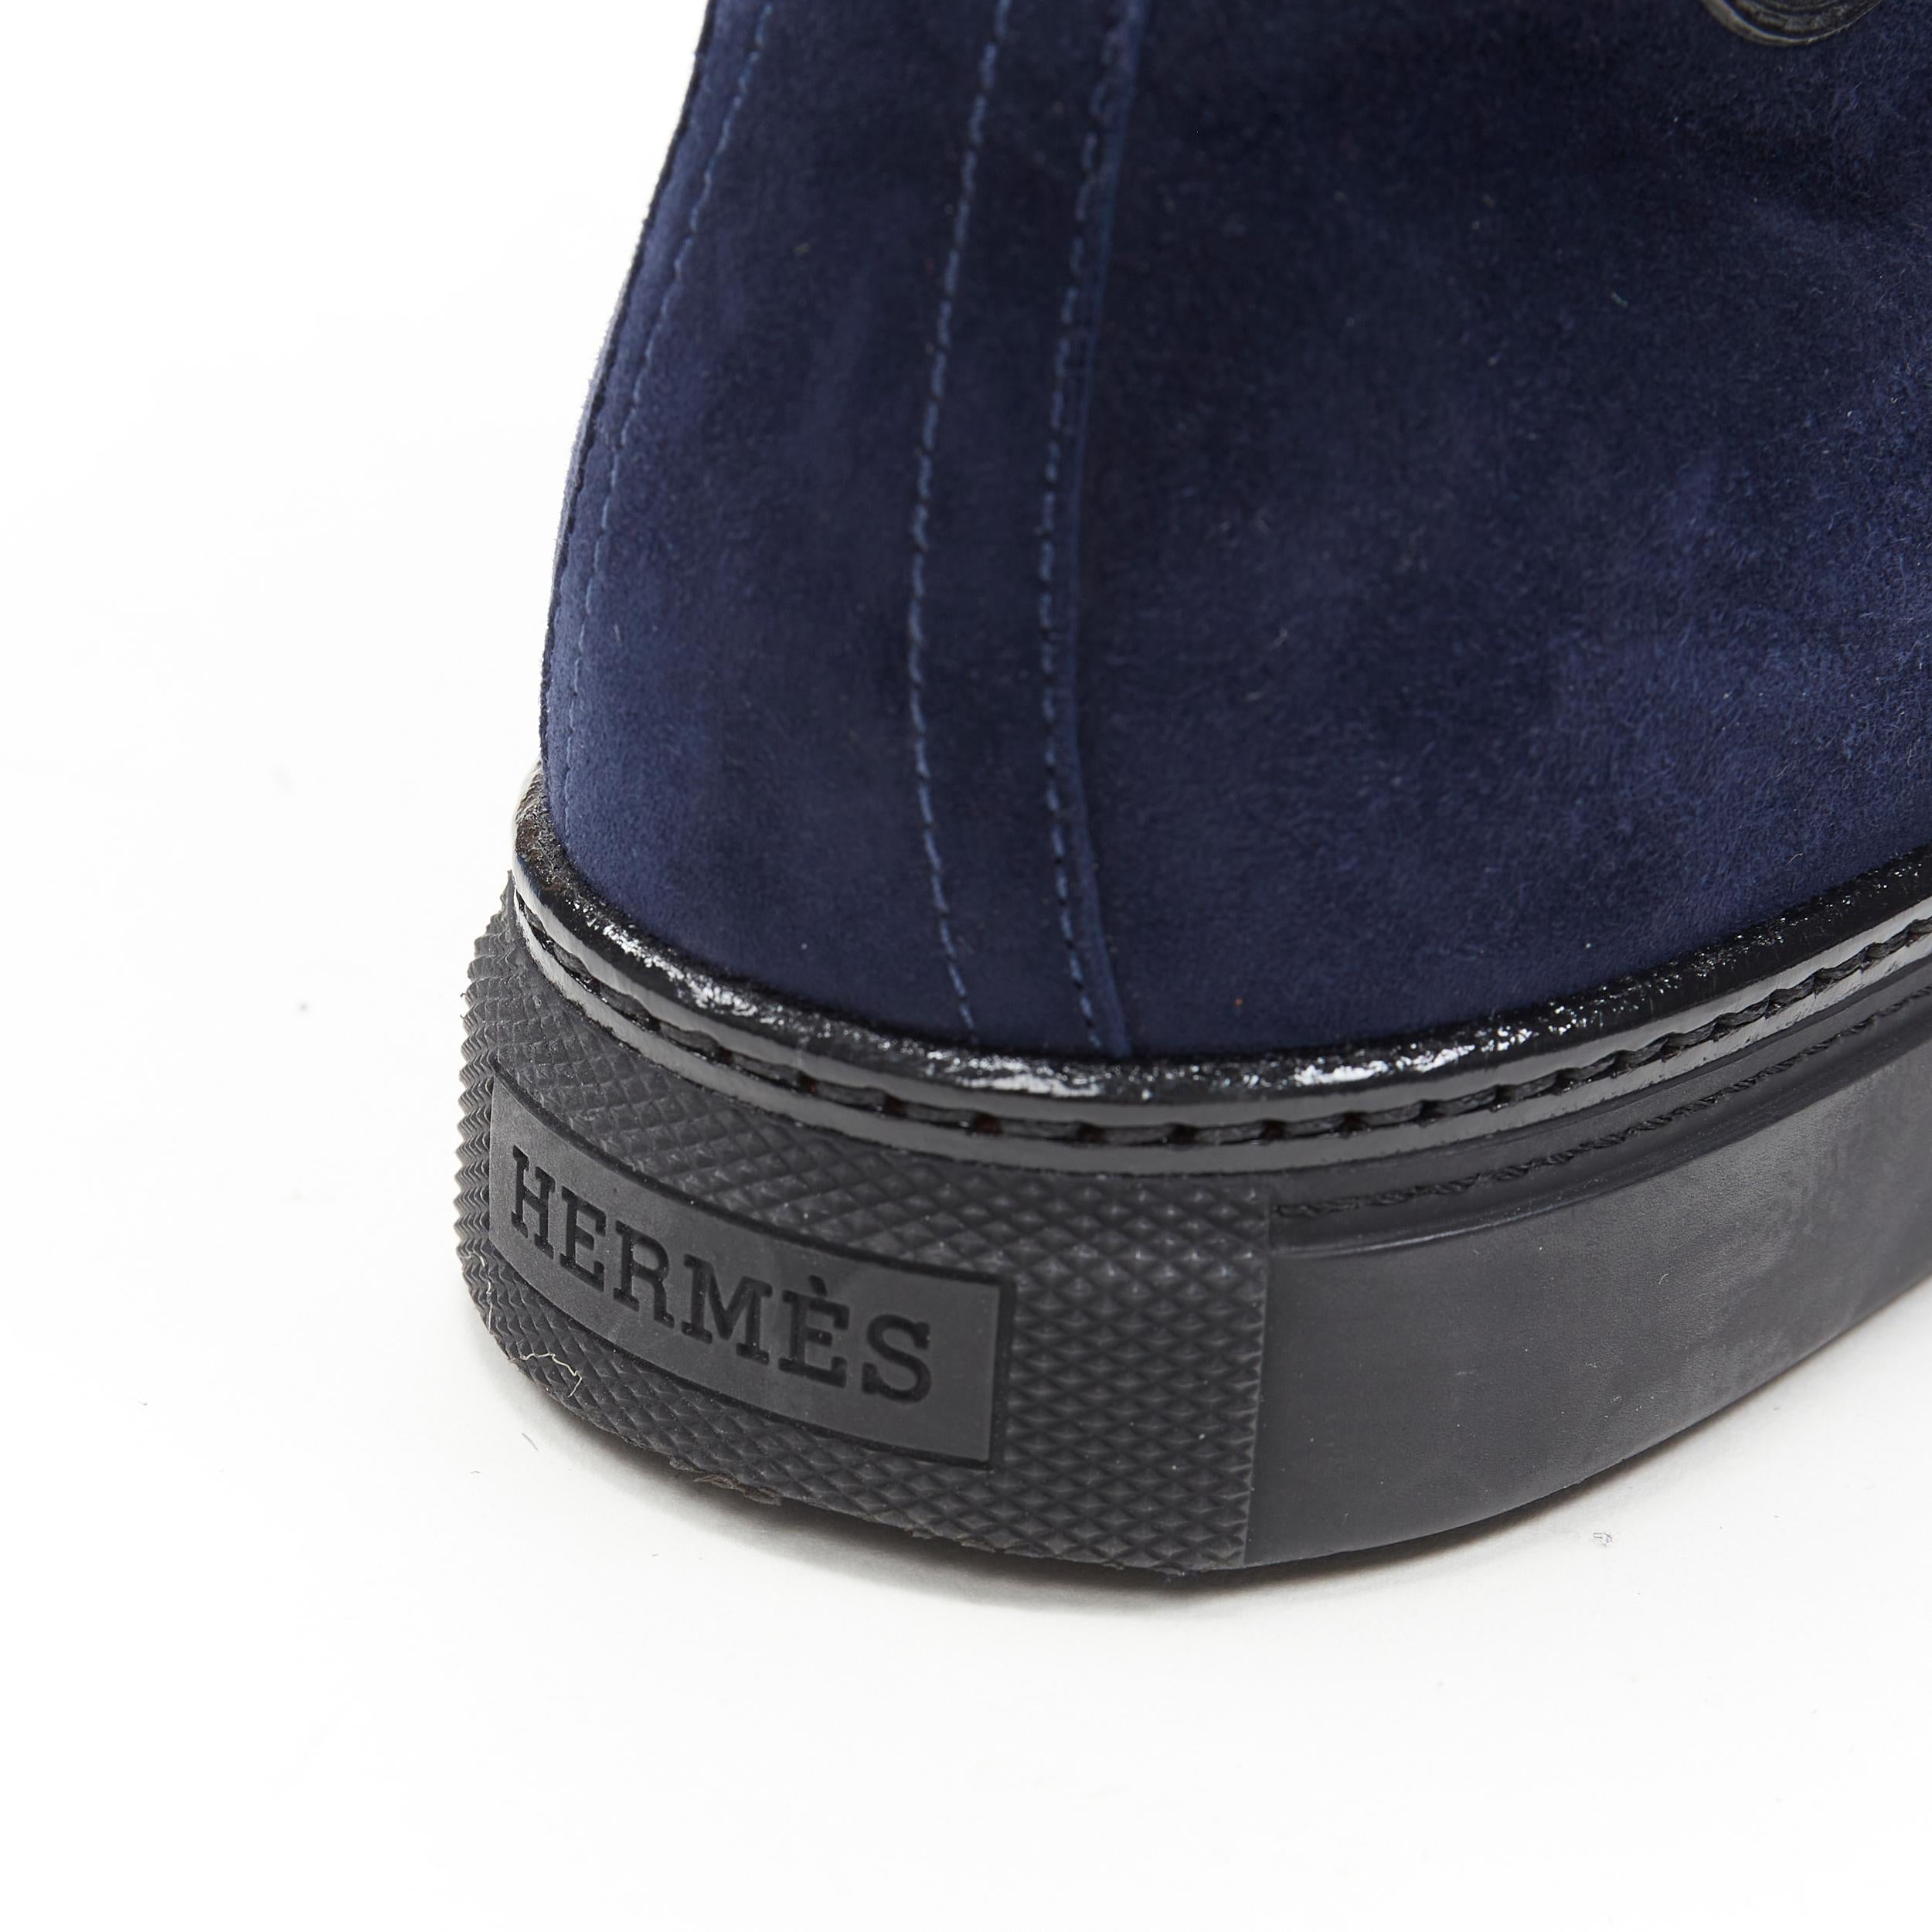 HERMES Jimmy navy blue suede H logo stamp high top sneakers EU41 5